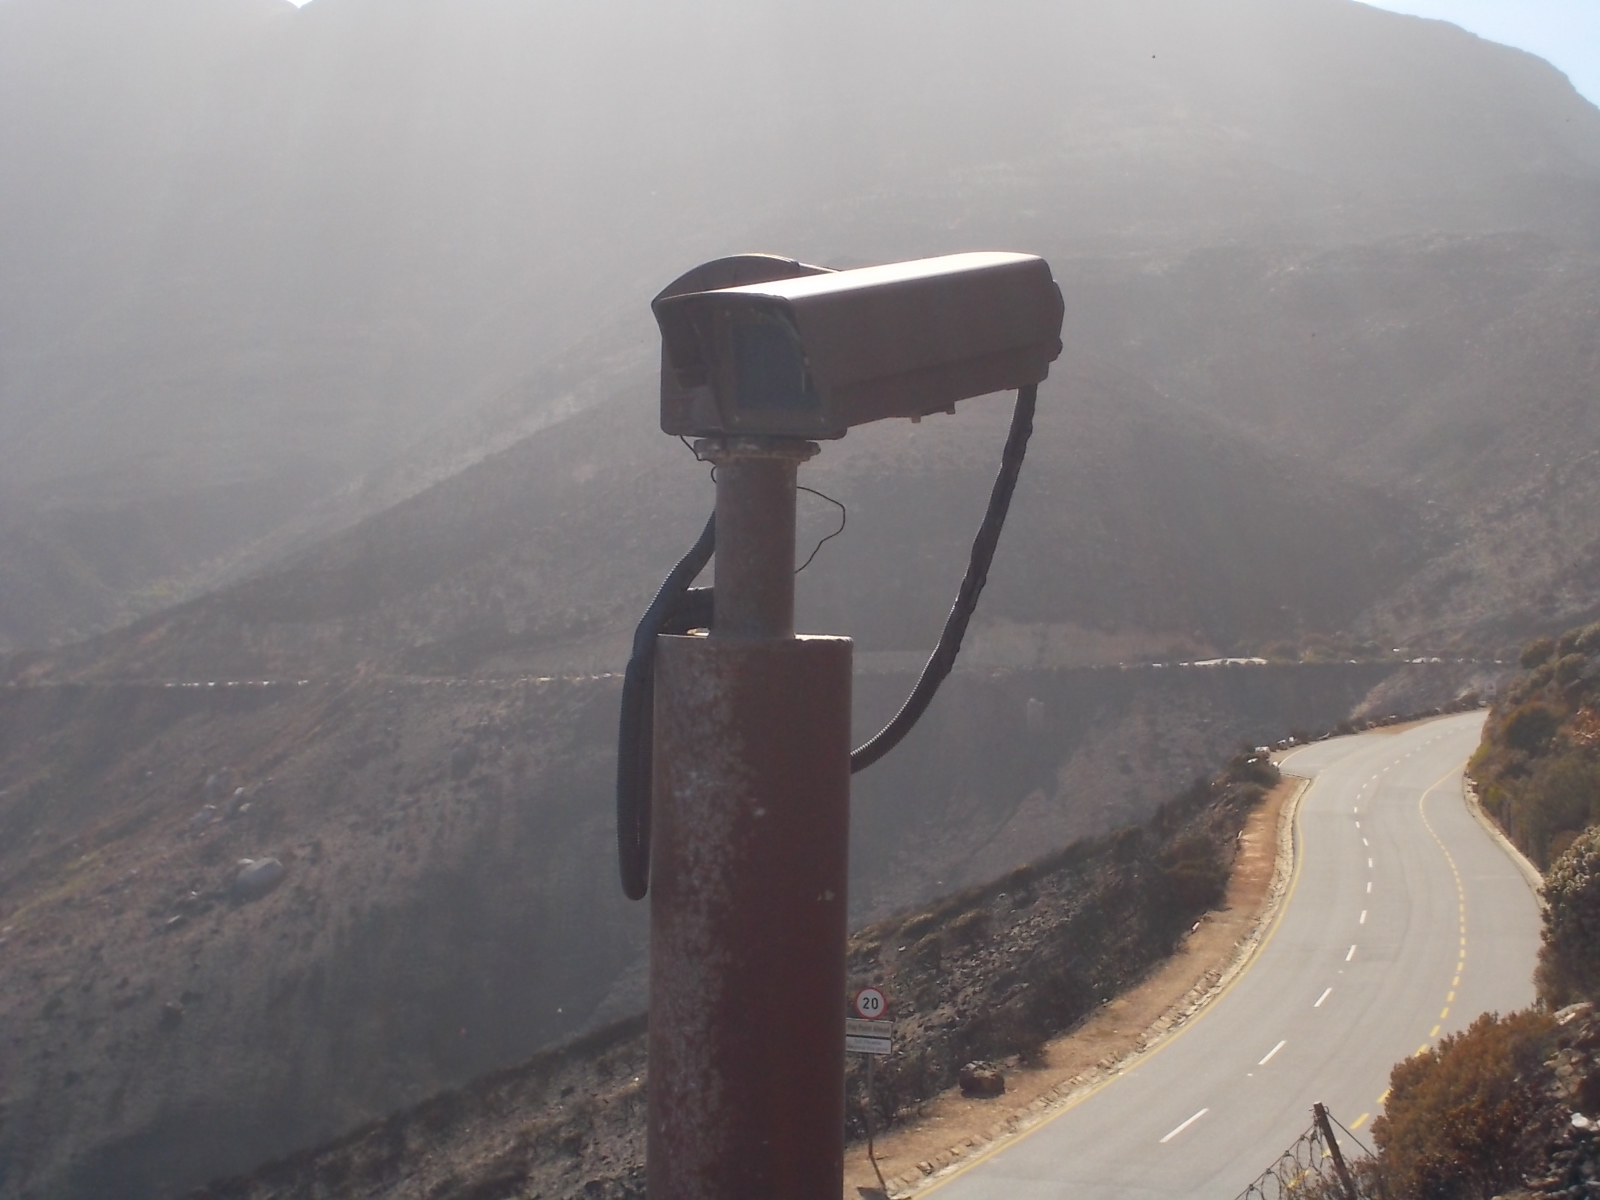 A CCTV security camera on Chapman's Peak.